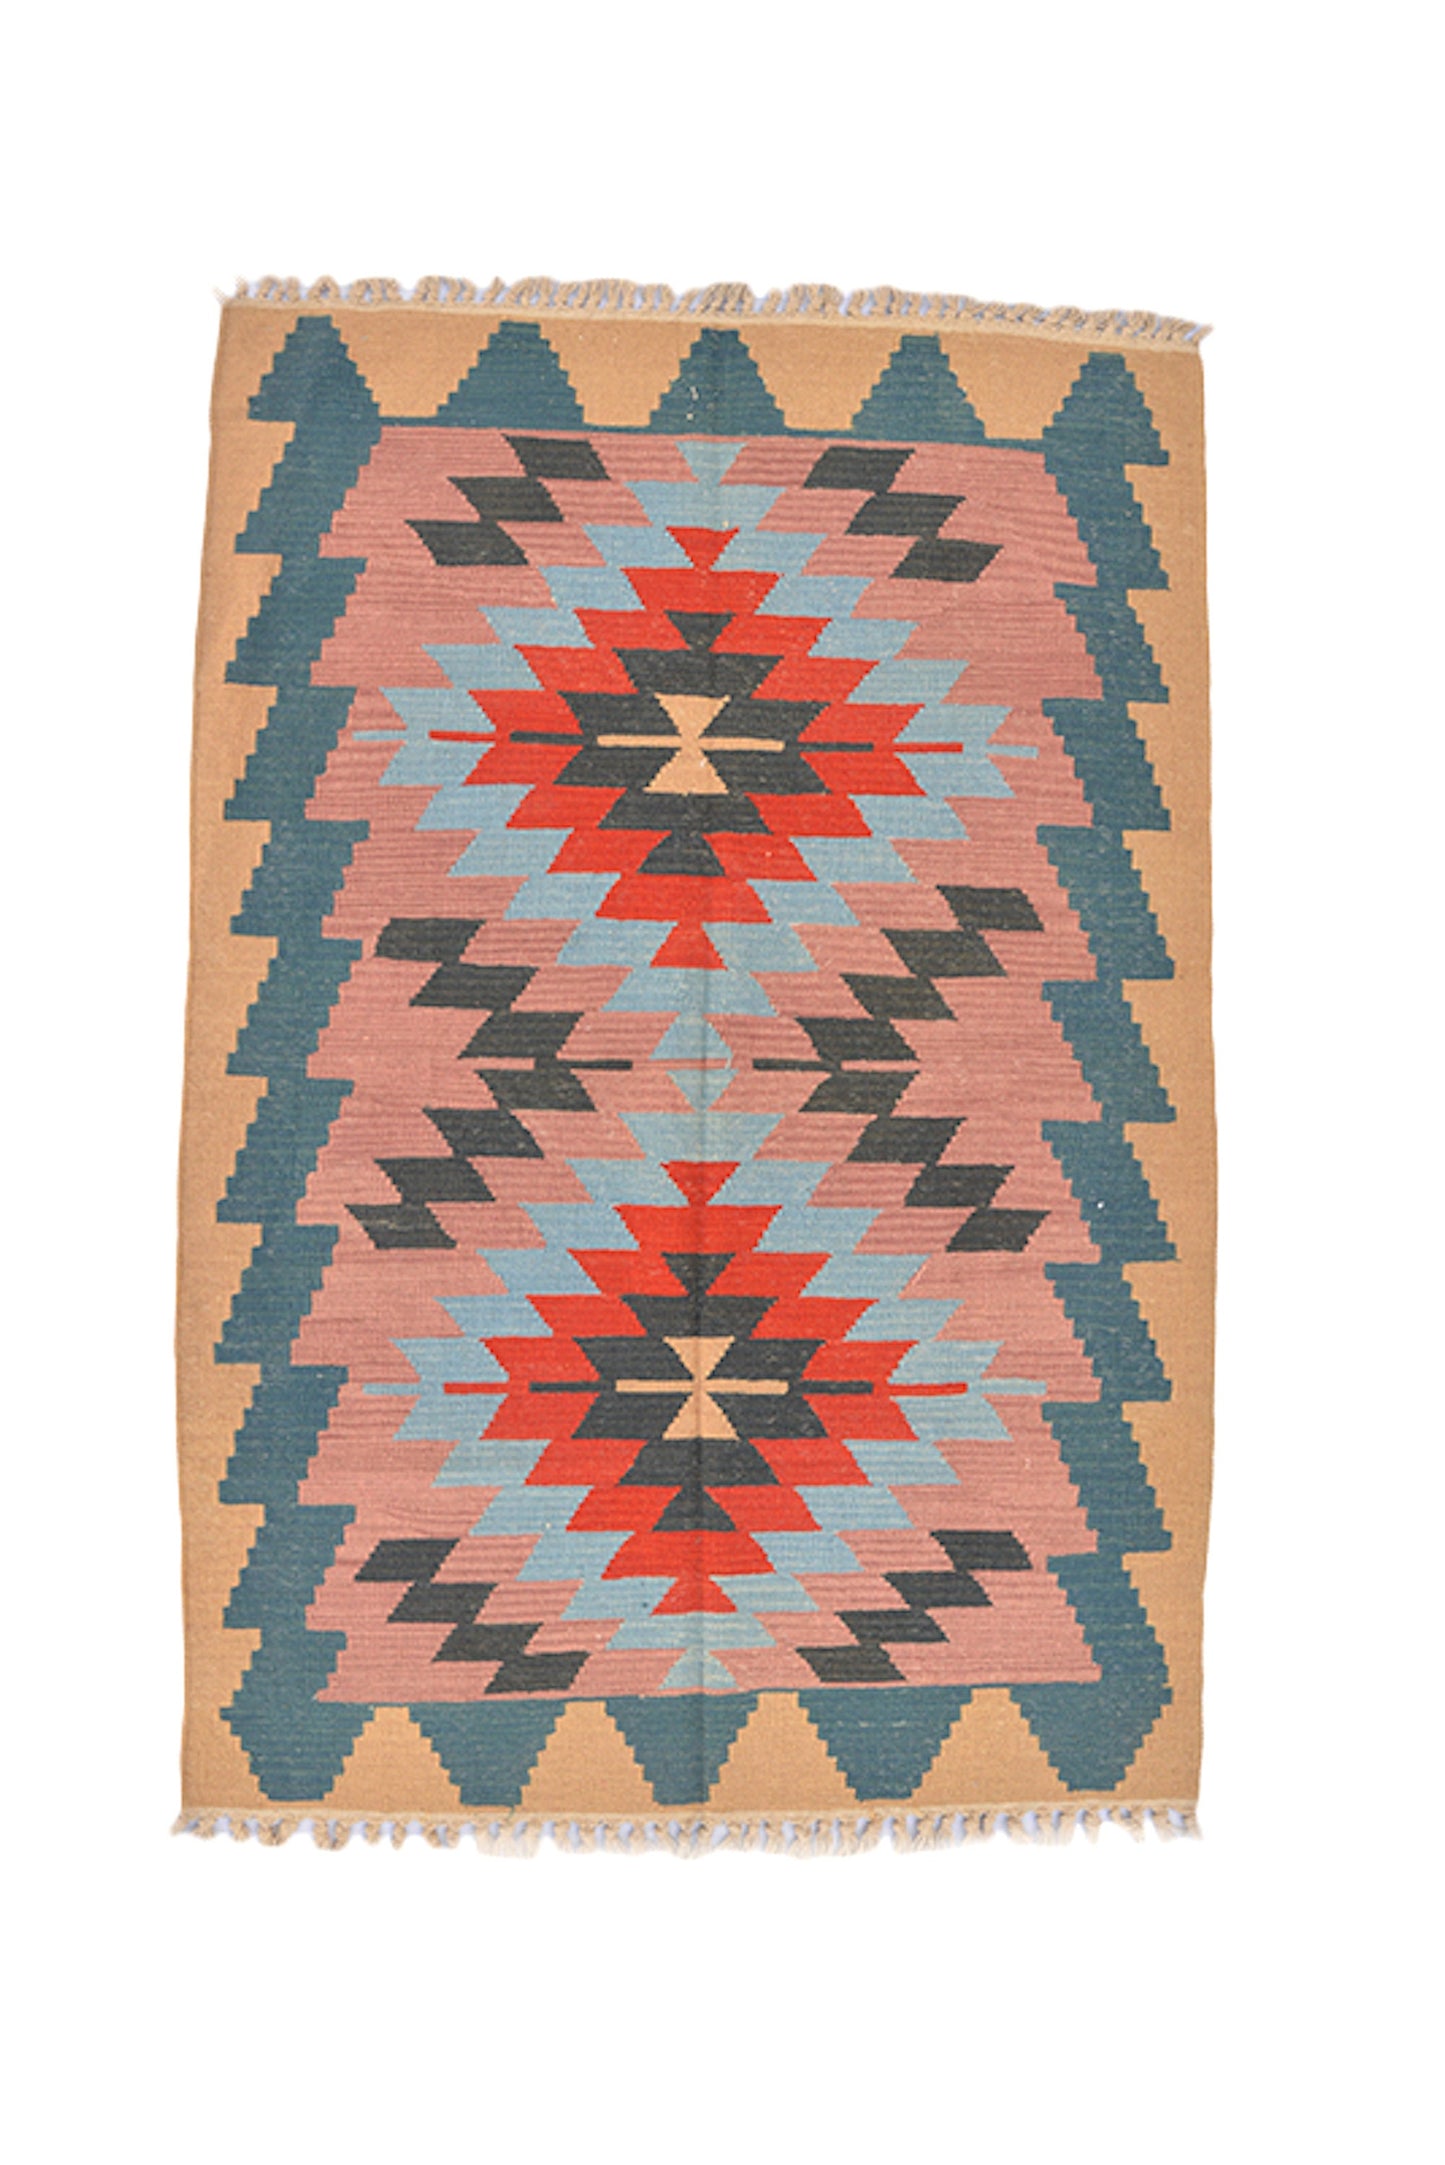 5 x 6 Feet Multi Color Oriental Rug | Hand Woven Area Rug | Oriental Persian Caucasian Rug | Living Room Rug | Wool Traditional Vintage